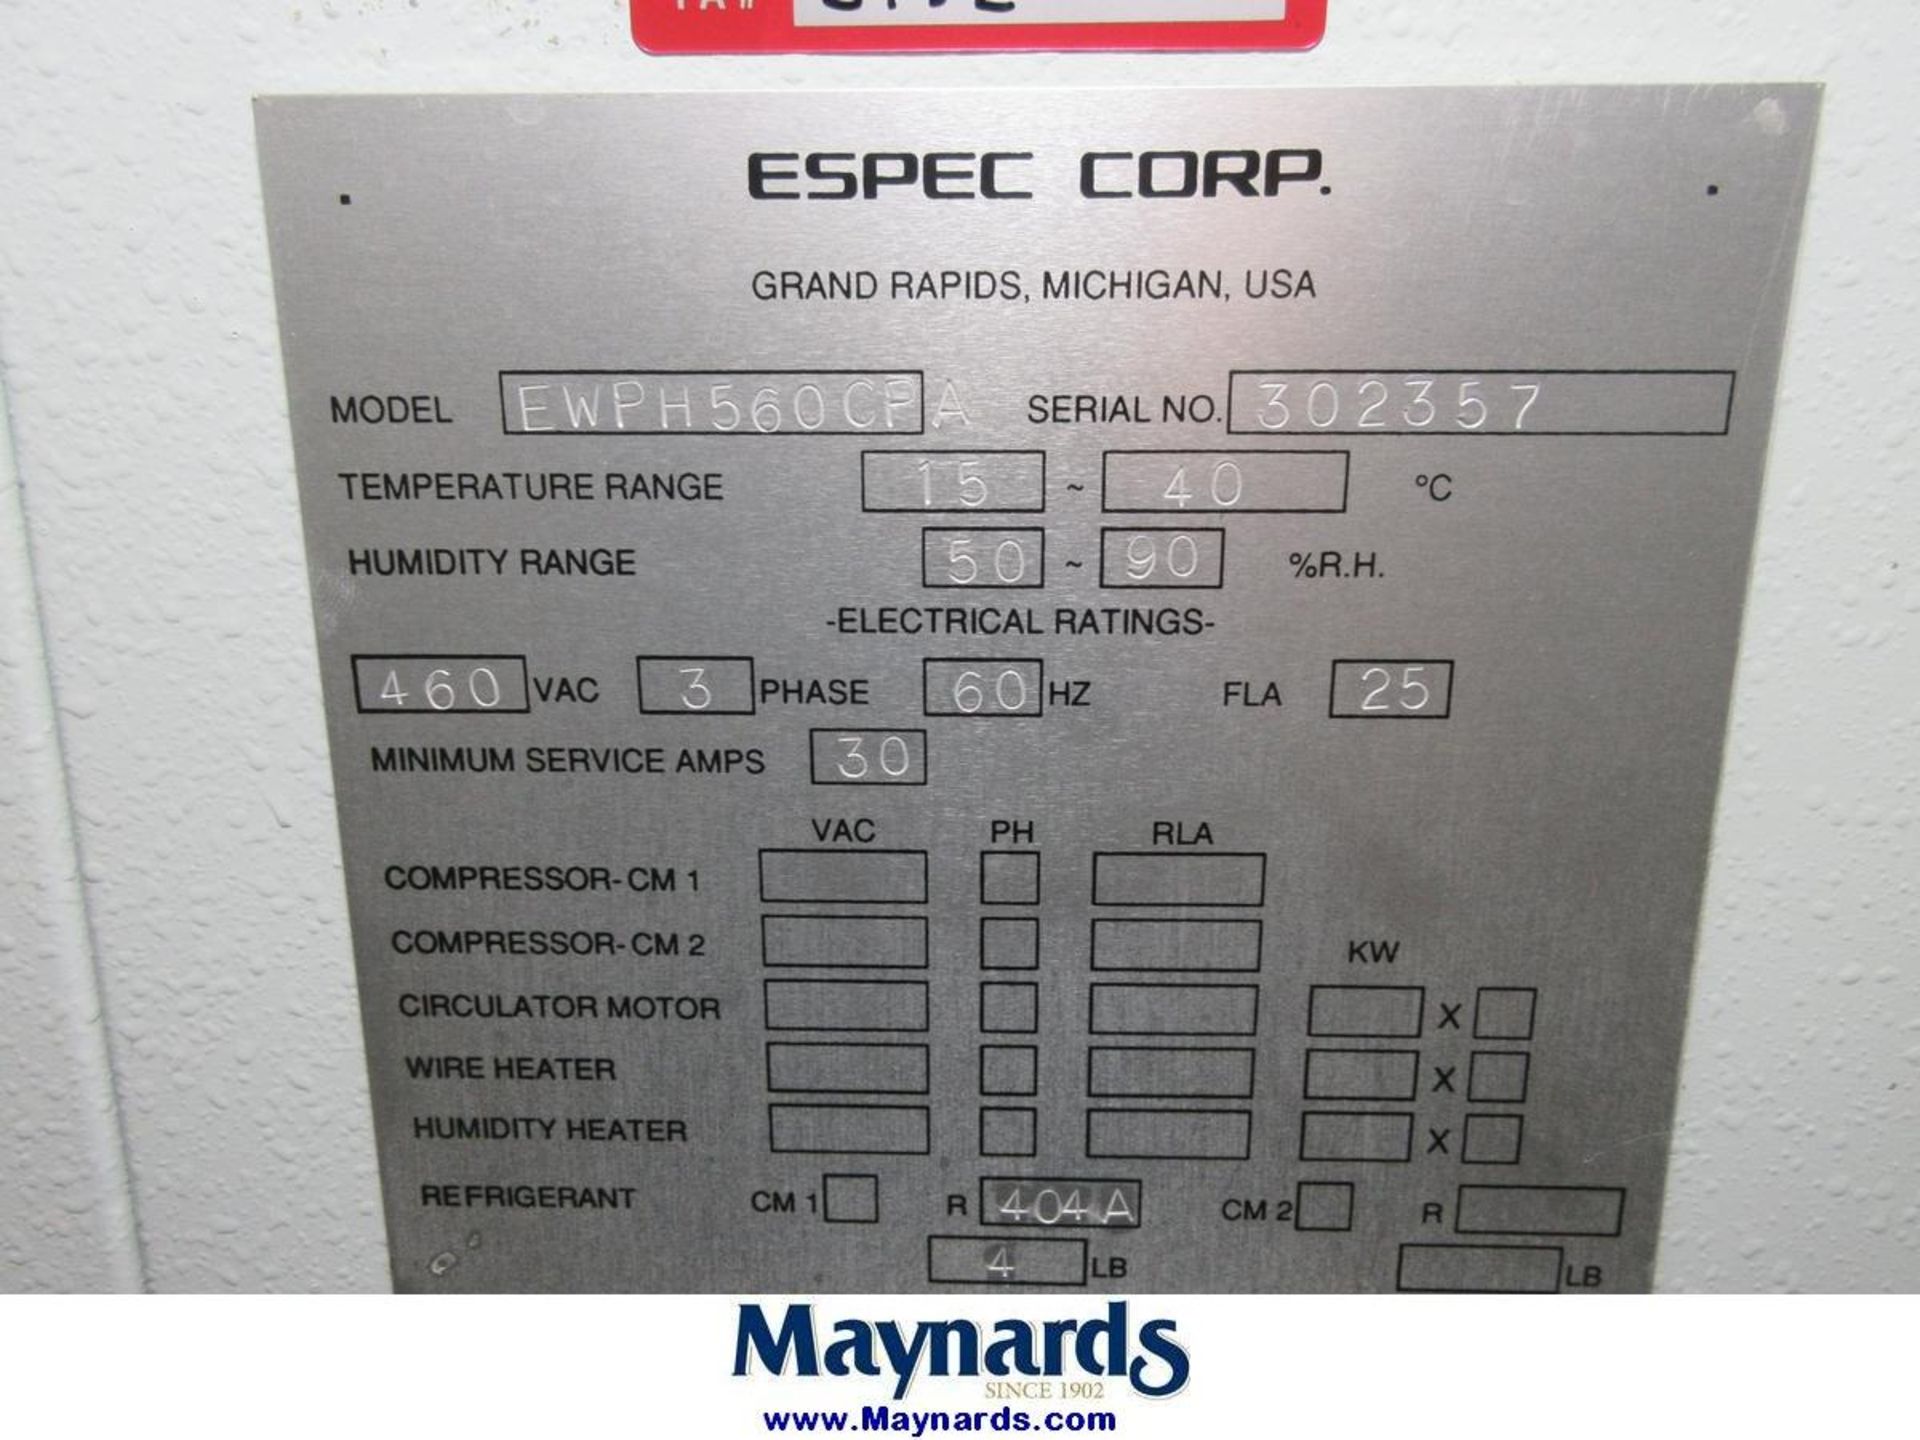 1995 Espec EWPH560CPA Temperature/Humidity Chamber - Image 9 of 9